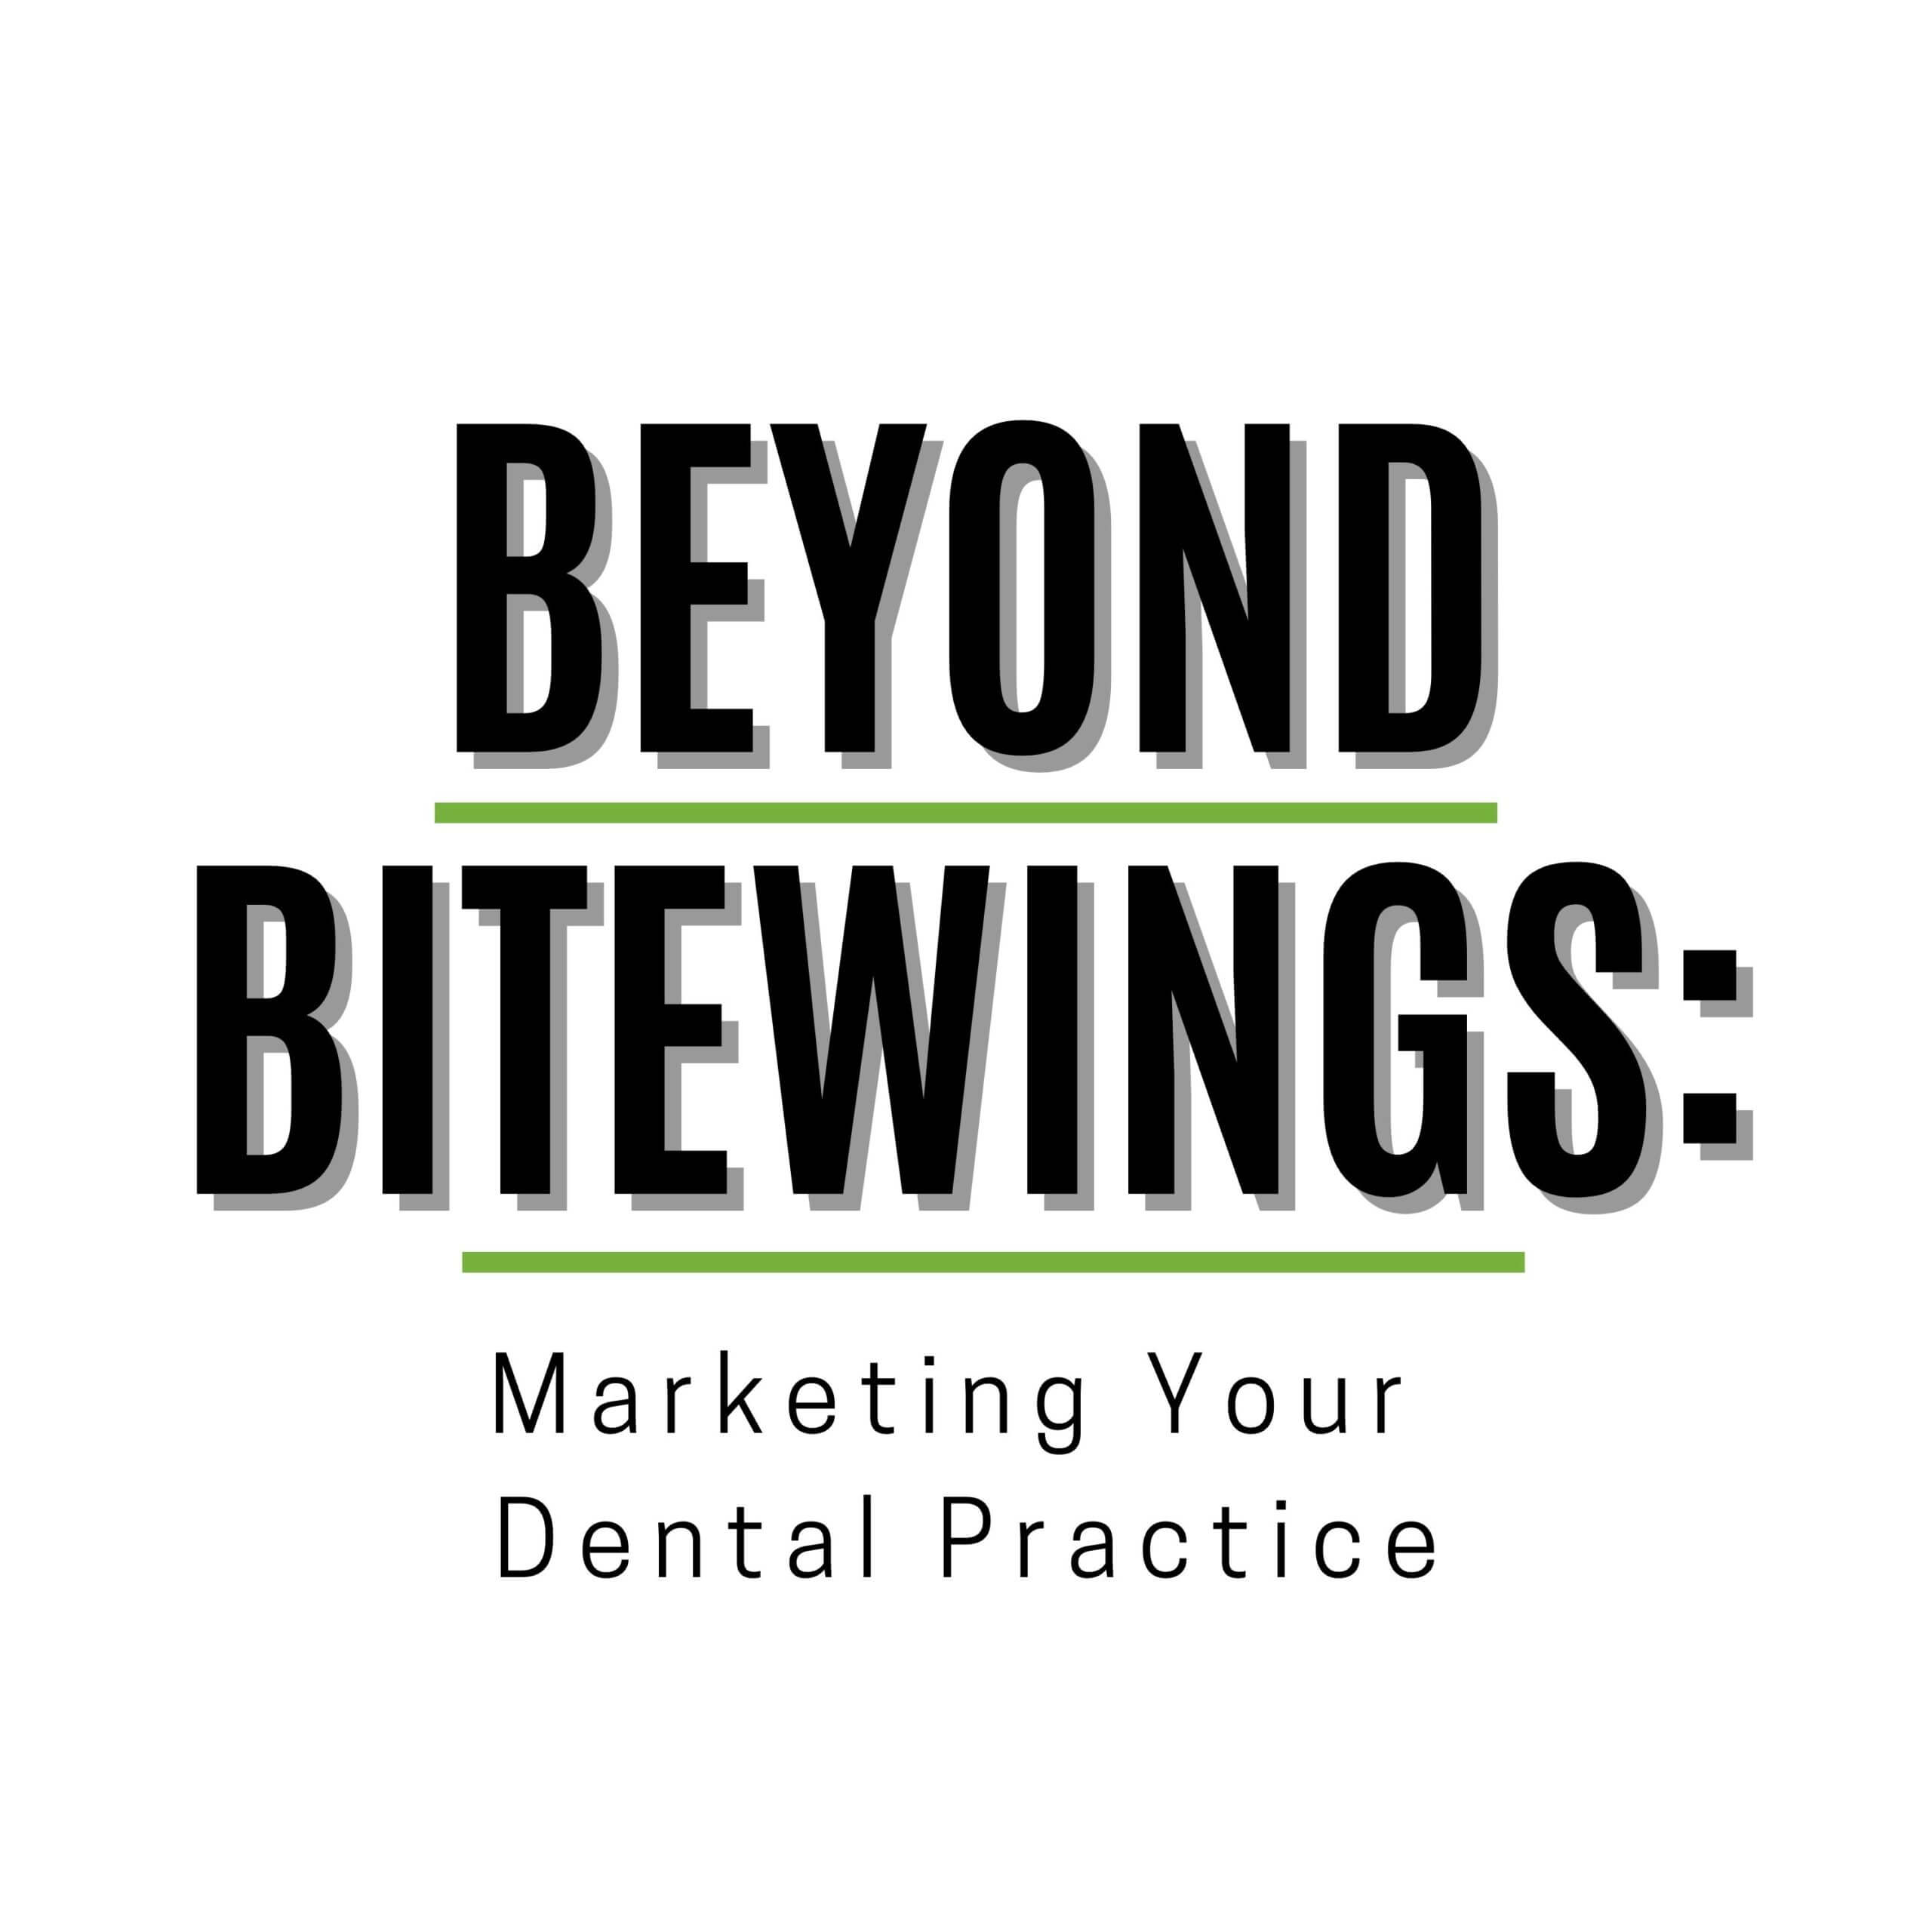 Marketing Your Dental Practice